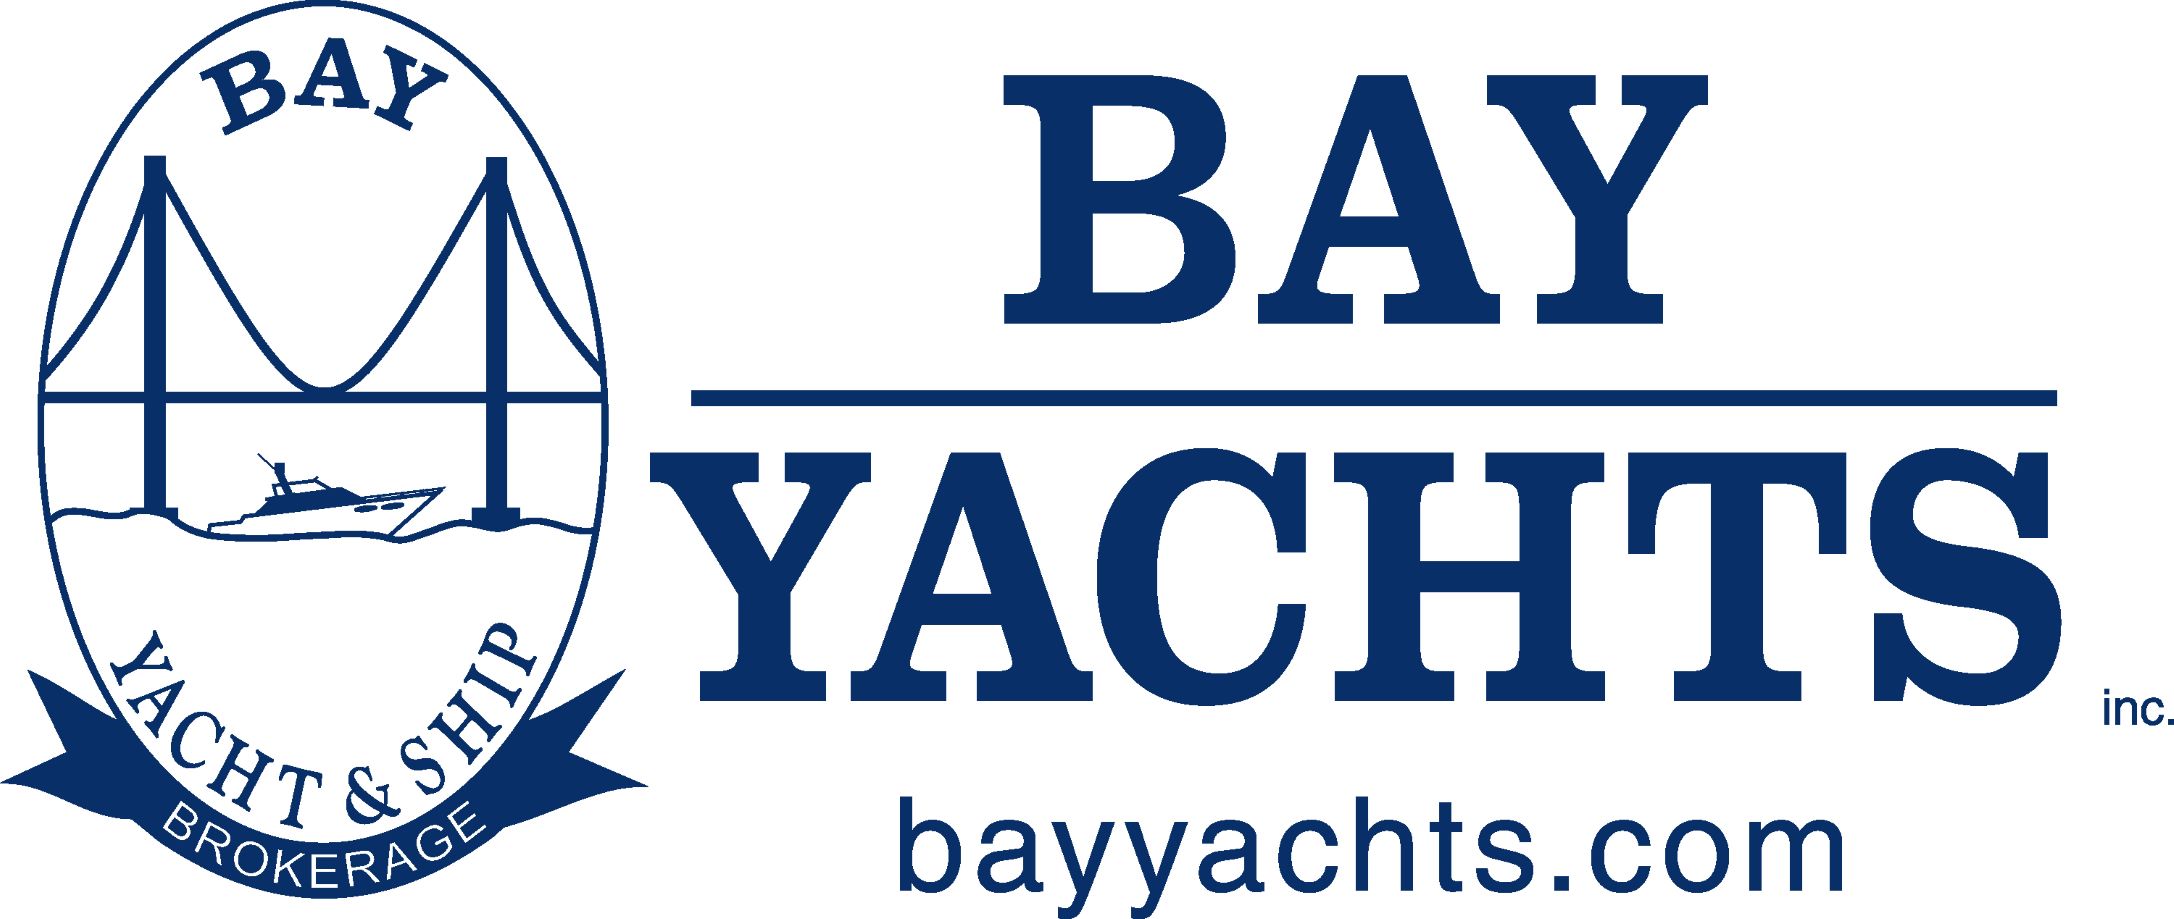 Bay Yachts, Inc.